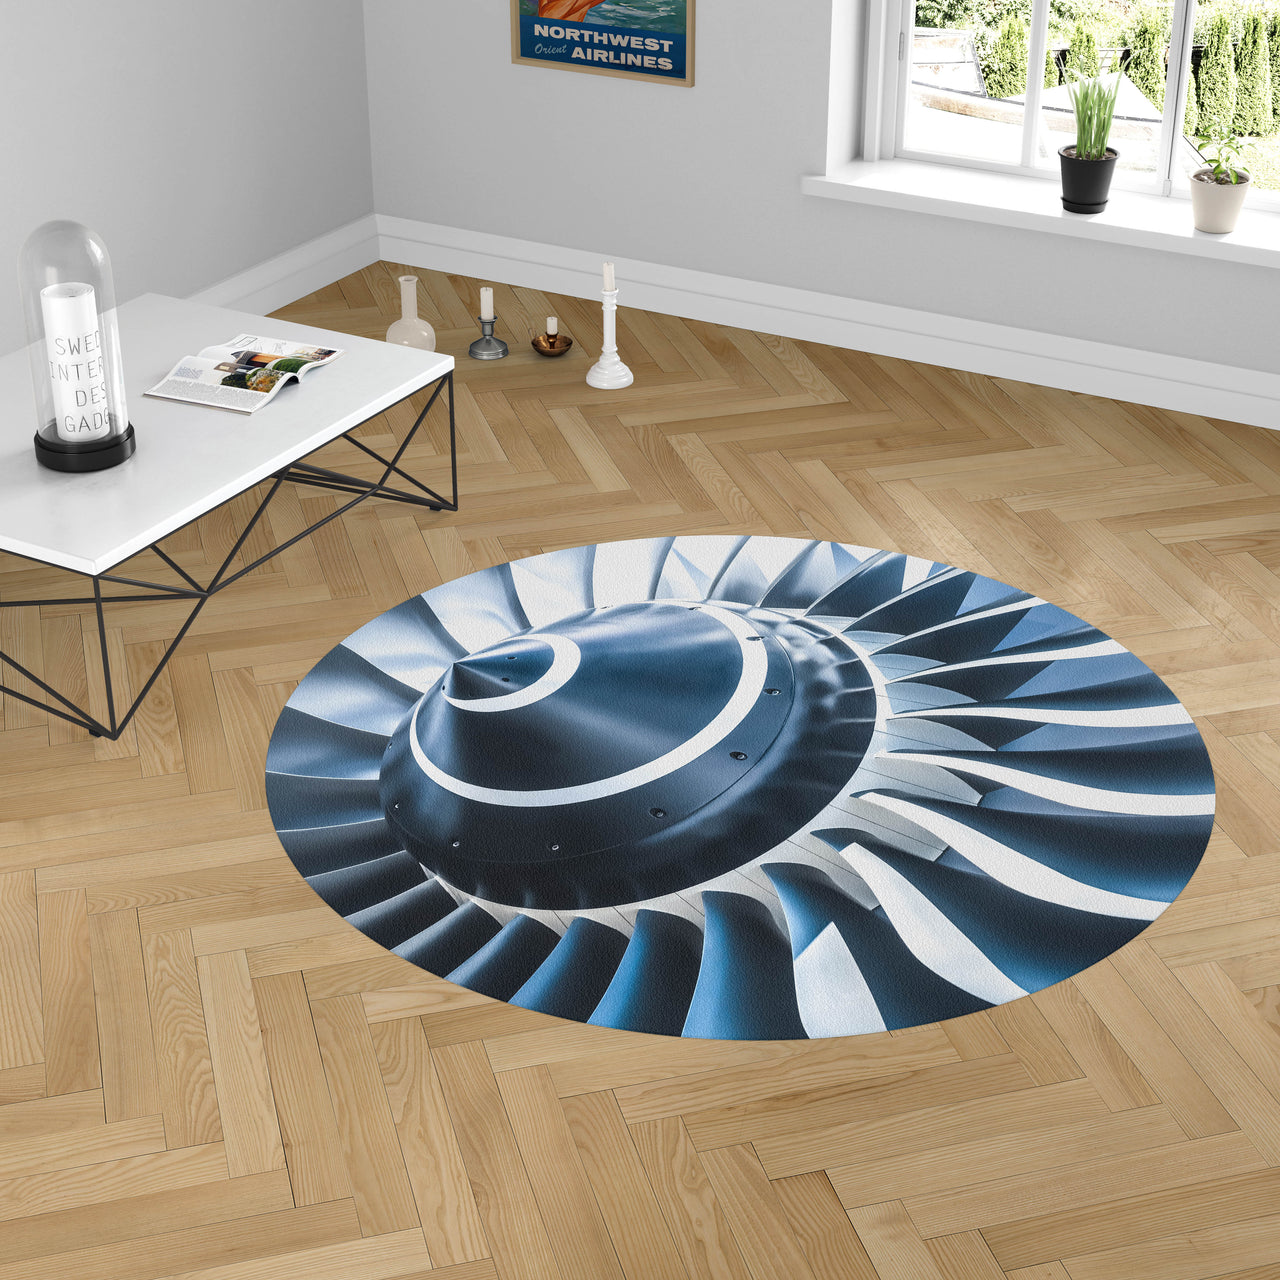 Blue Toned Super Jet Engine Blades Closeup Designed Carpet & Floor Mats (Round)